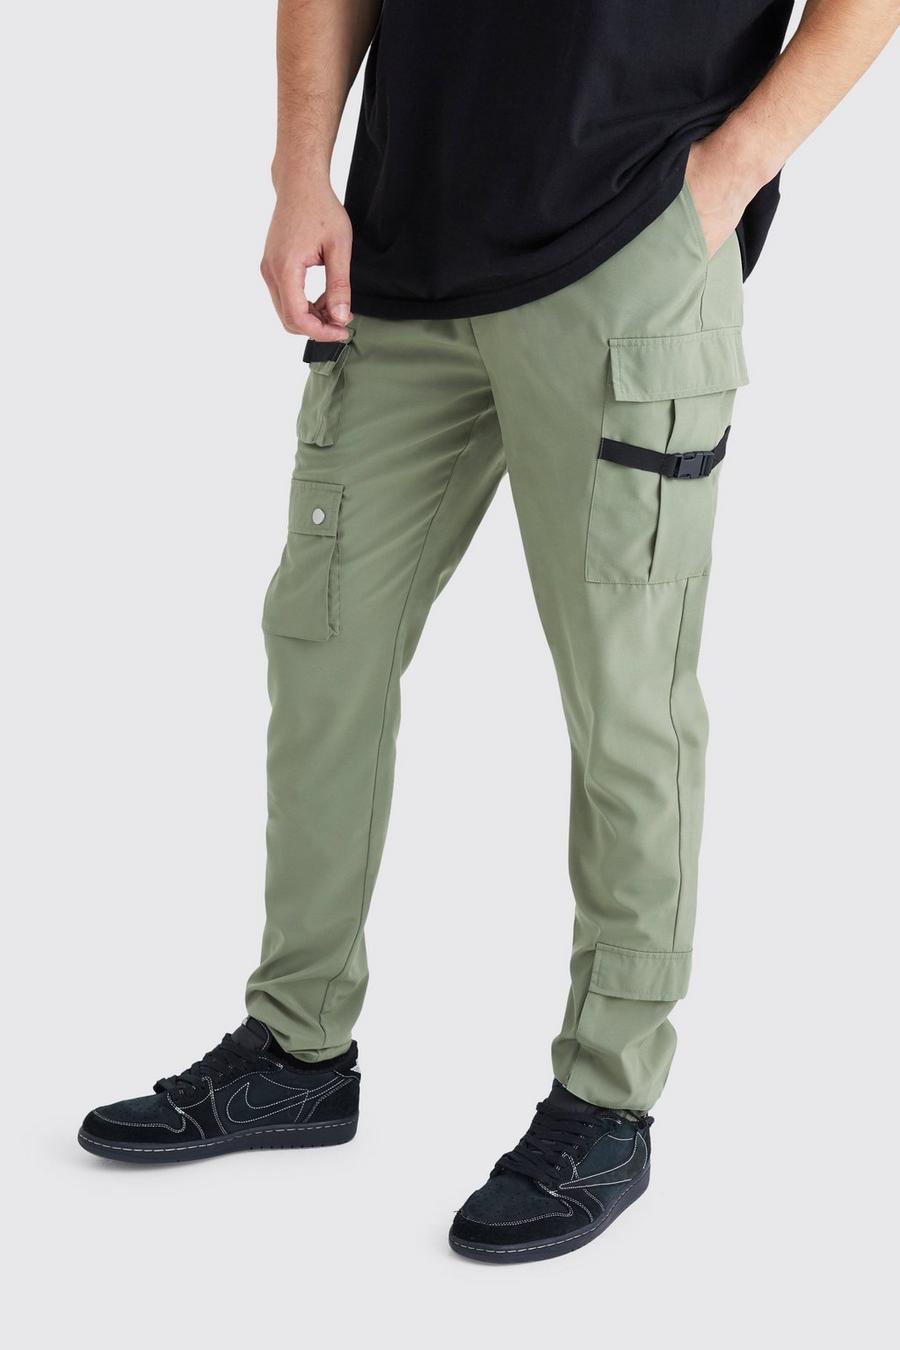 Olive Tall Skinny Multi Pocket Cargo Buckle Trouser